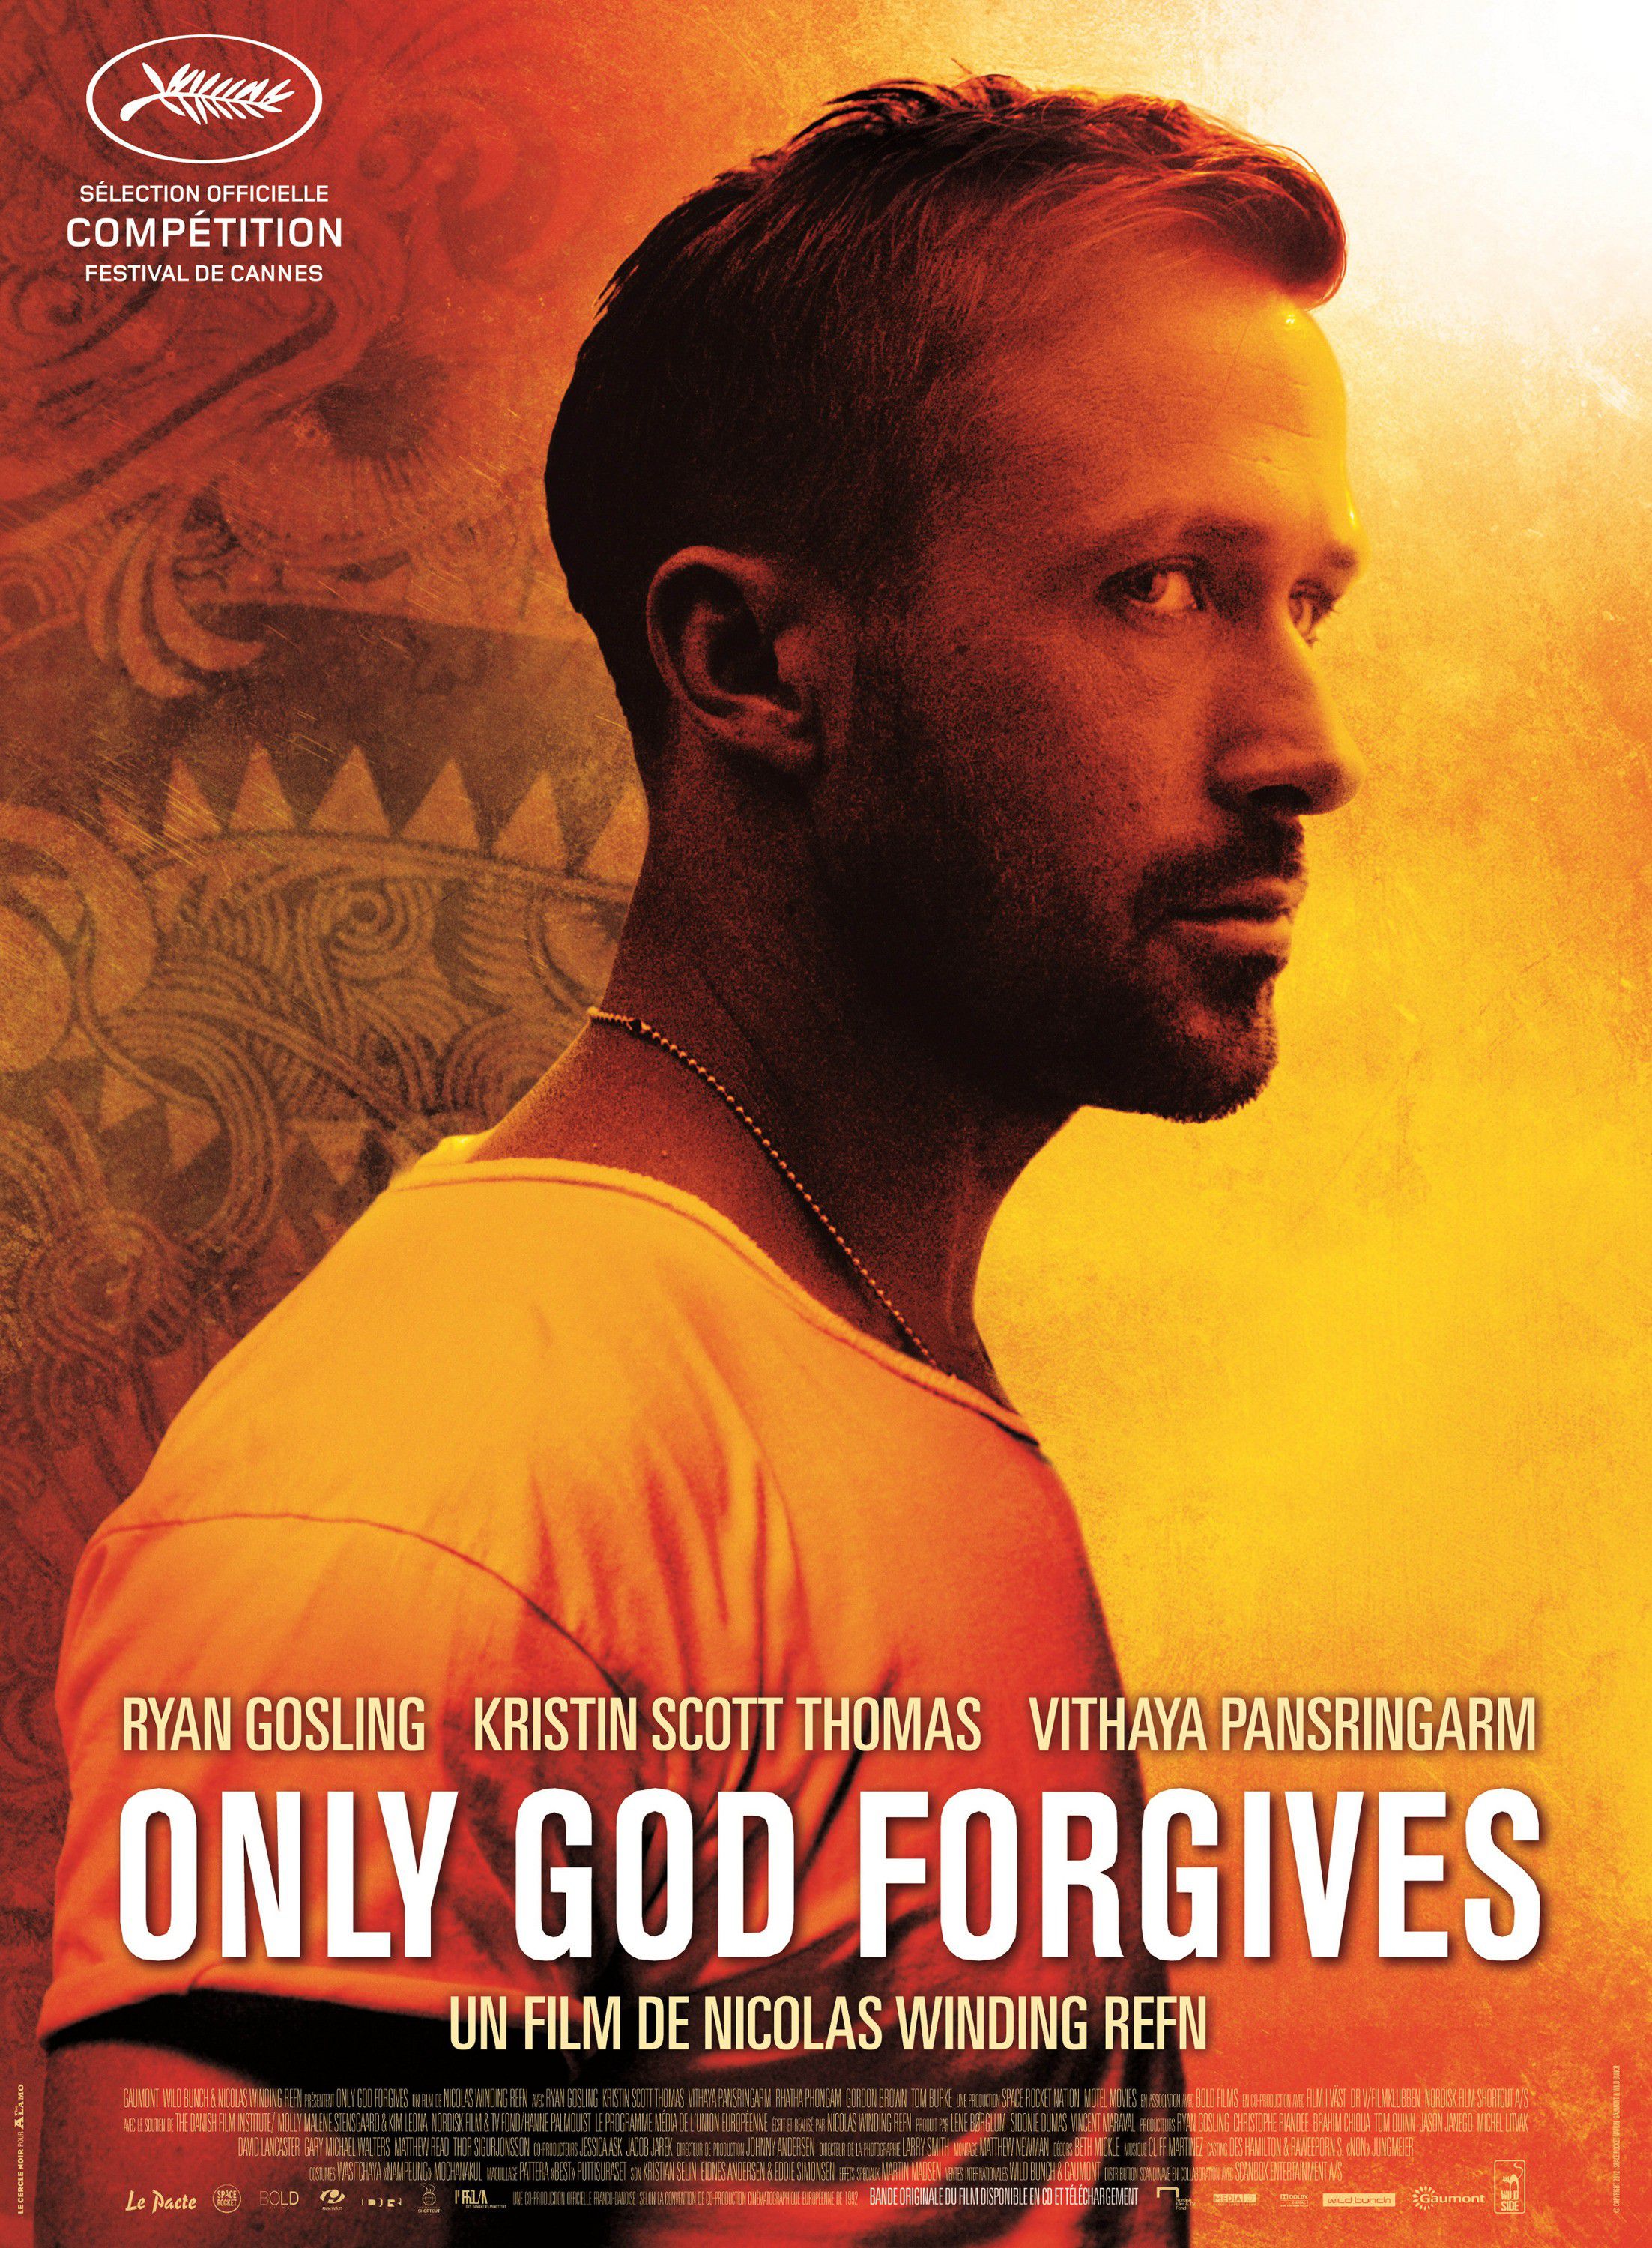 Only God Forgives - Film (2013) streaming VF gratuit complet